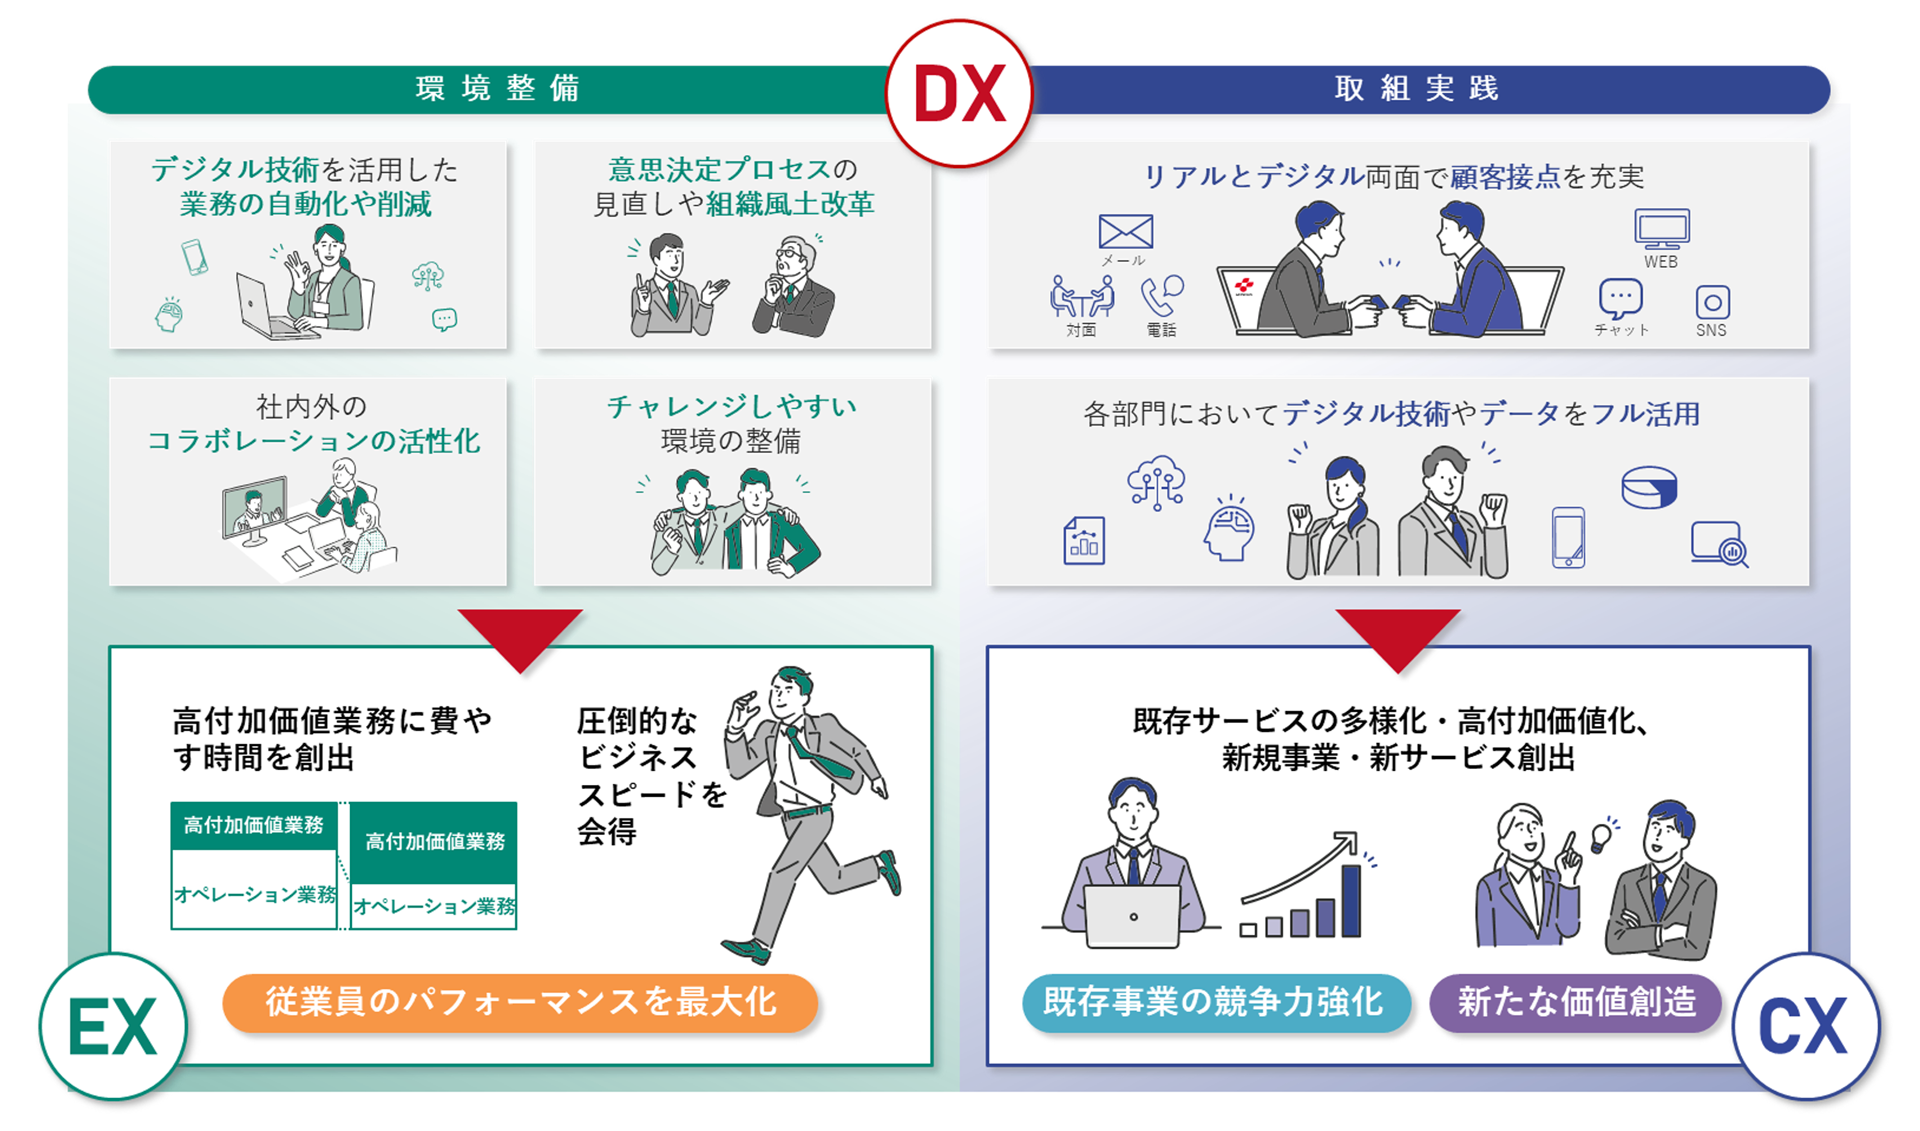 DX(環境整備、取組実践)、EX(従業員のパフォーマンスを最大化)、CX(既存事業の競争力強化、新たな価値創造)